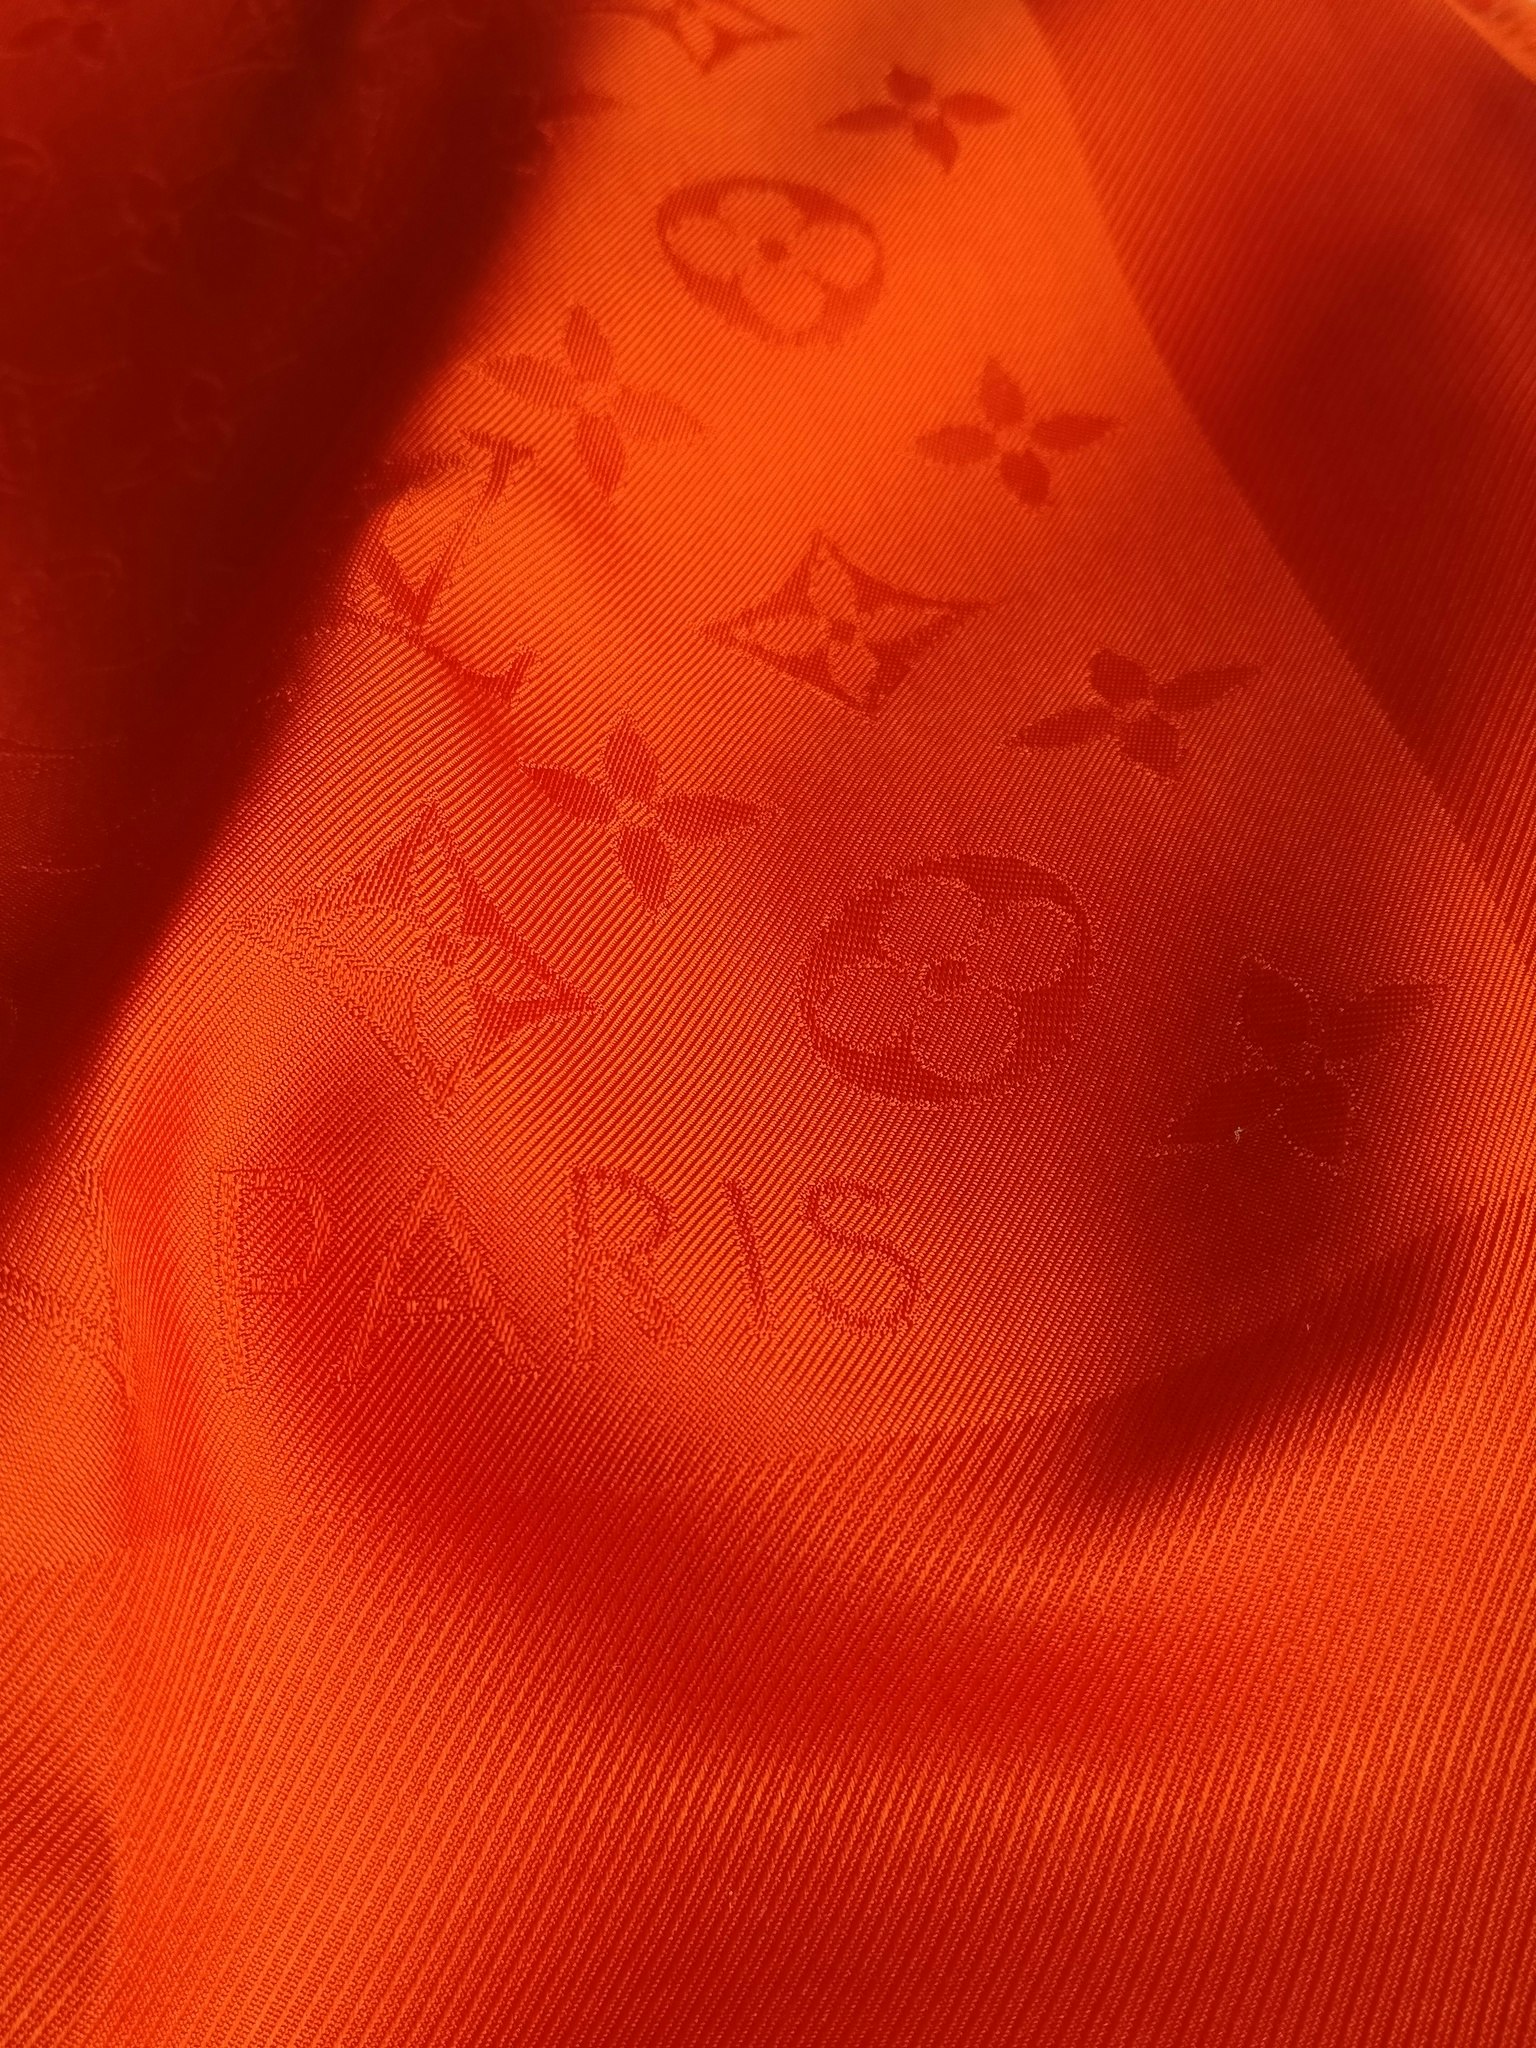 Louis Vuitton Monogram Silk Shawl